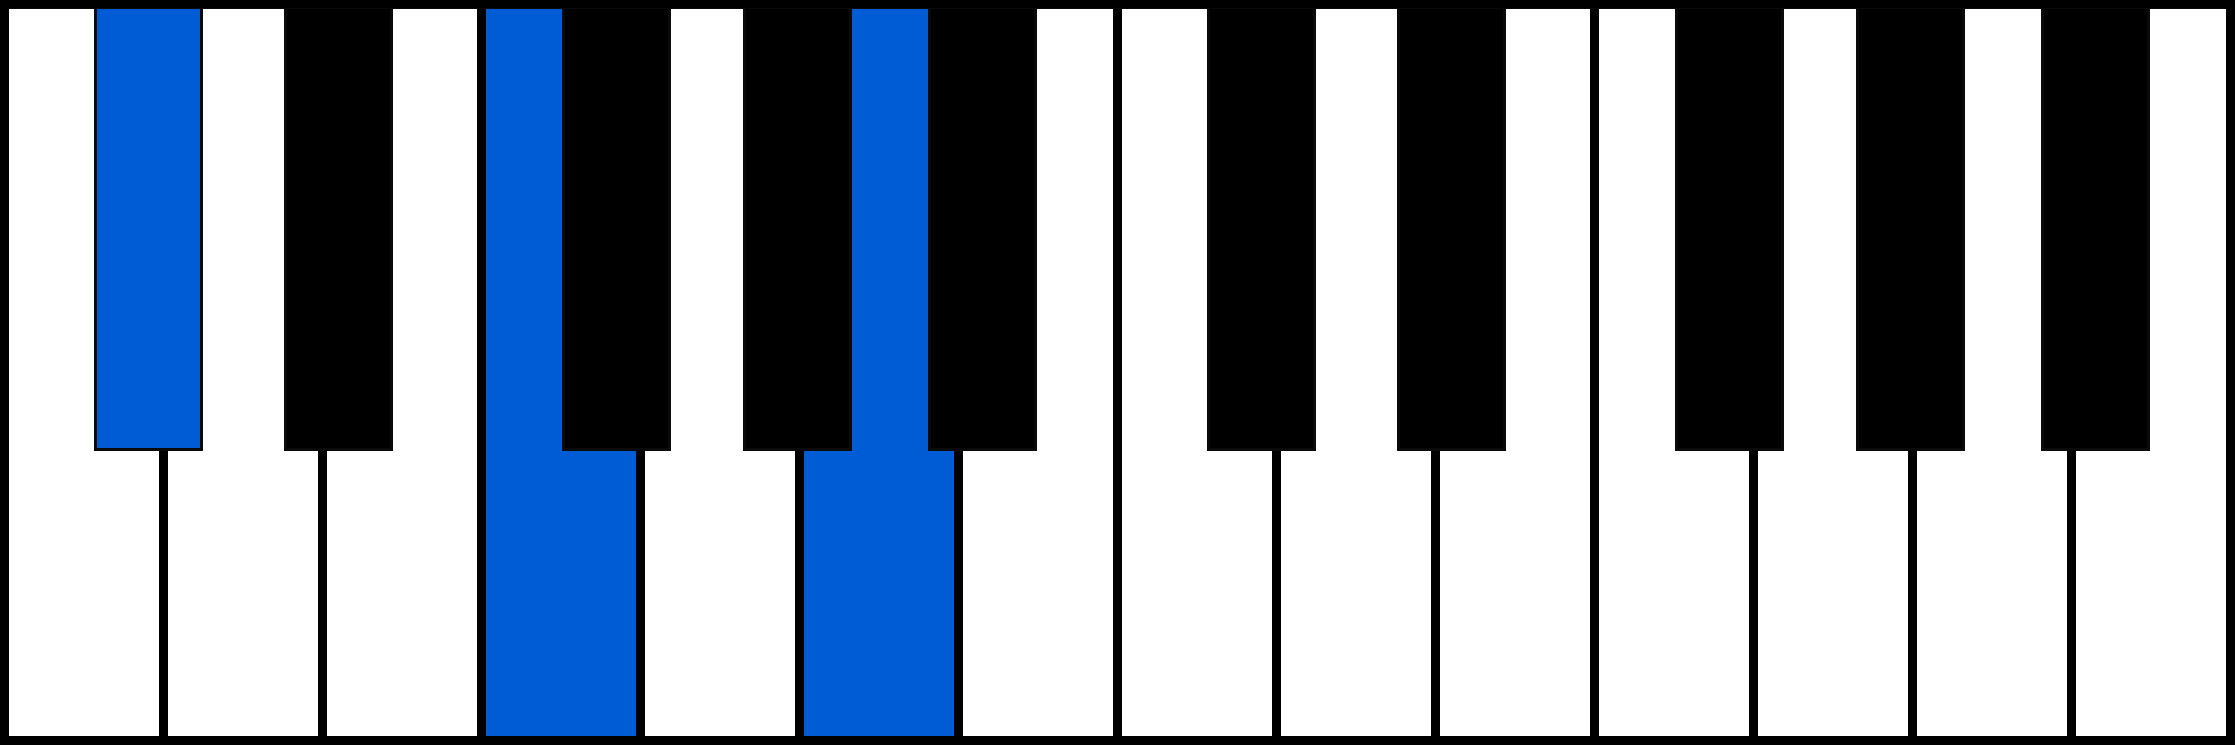 C#+ piano chord fingering